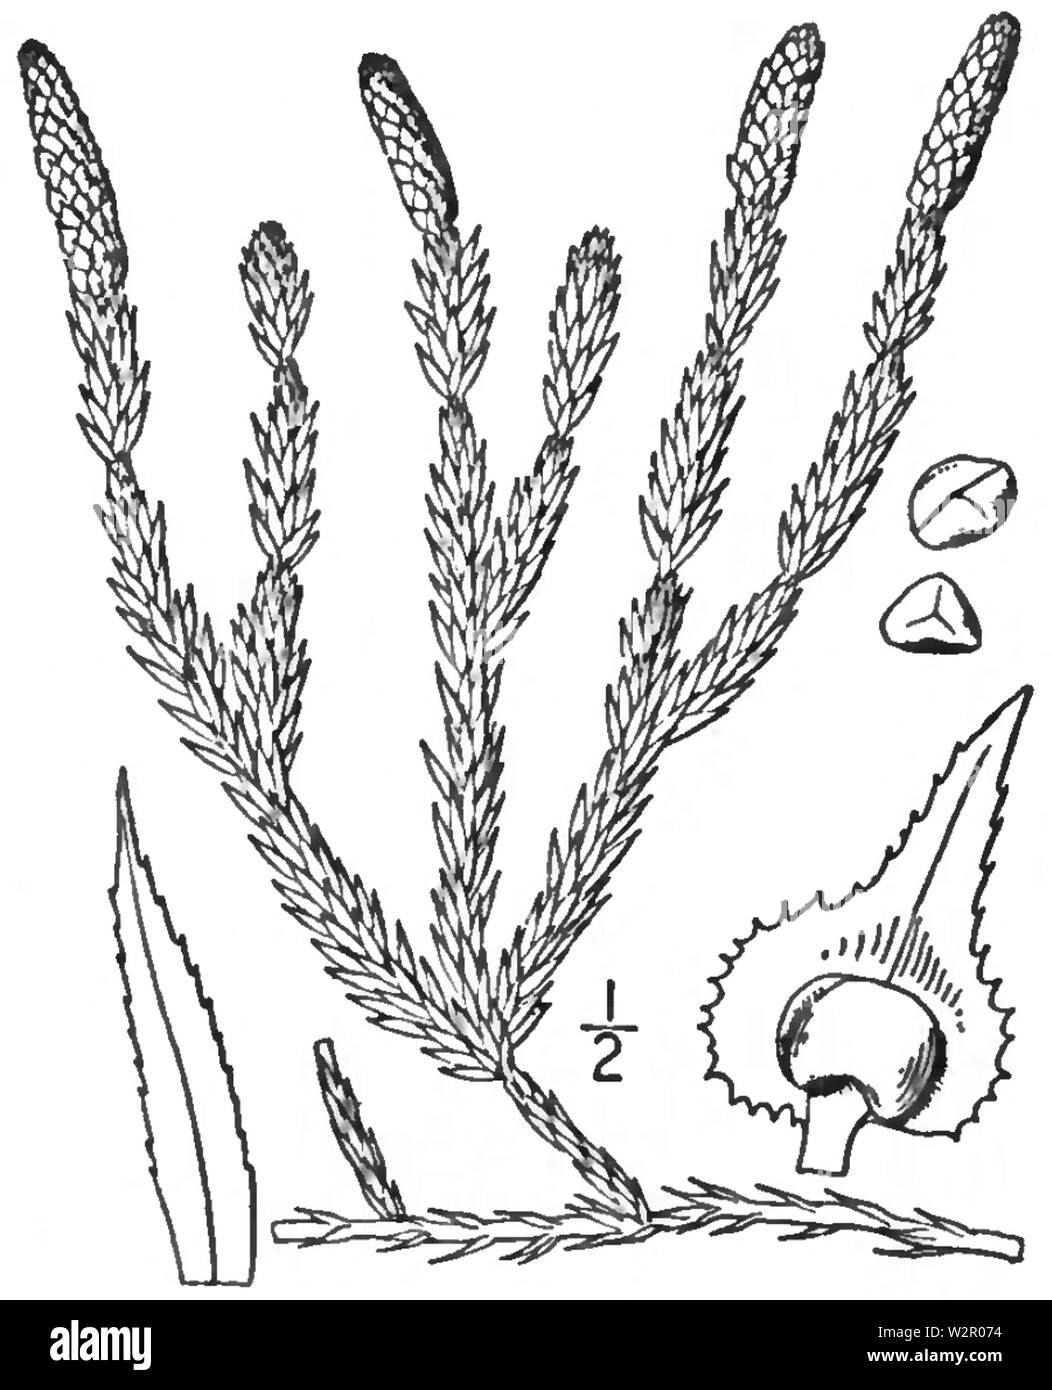 Белена черная ламинария плаун булавовидный. Плаун годичный (Lycopodium annotinum). Плаун Баранец строение. Плаун булавовидный. : Кладофора, плаун булавовидный, орляк обыкновенный.